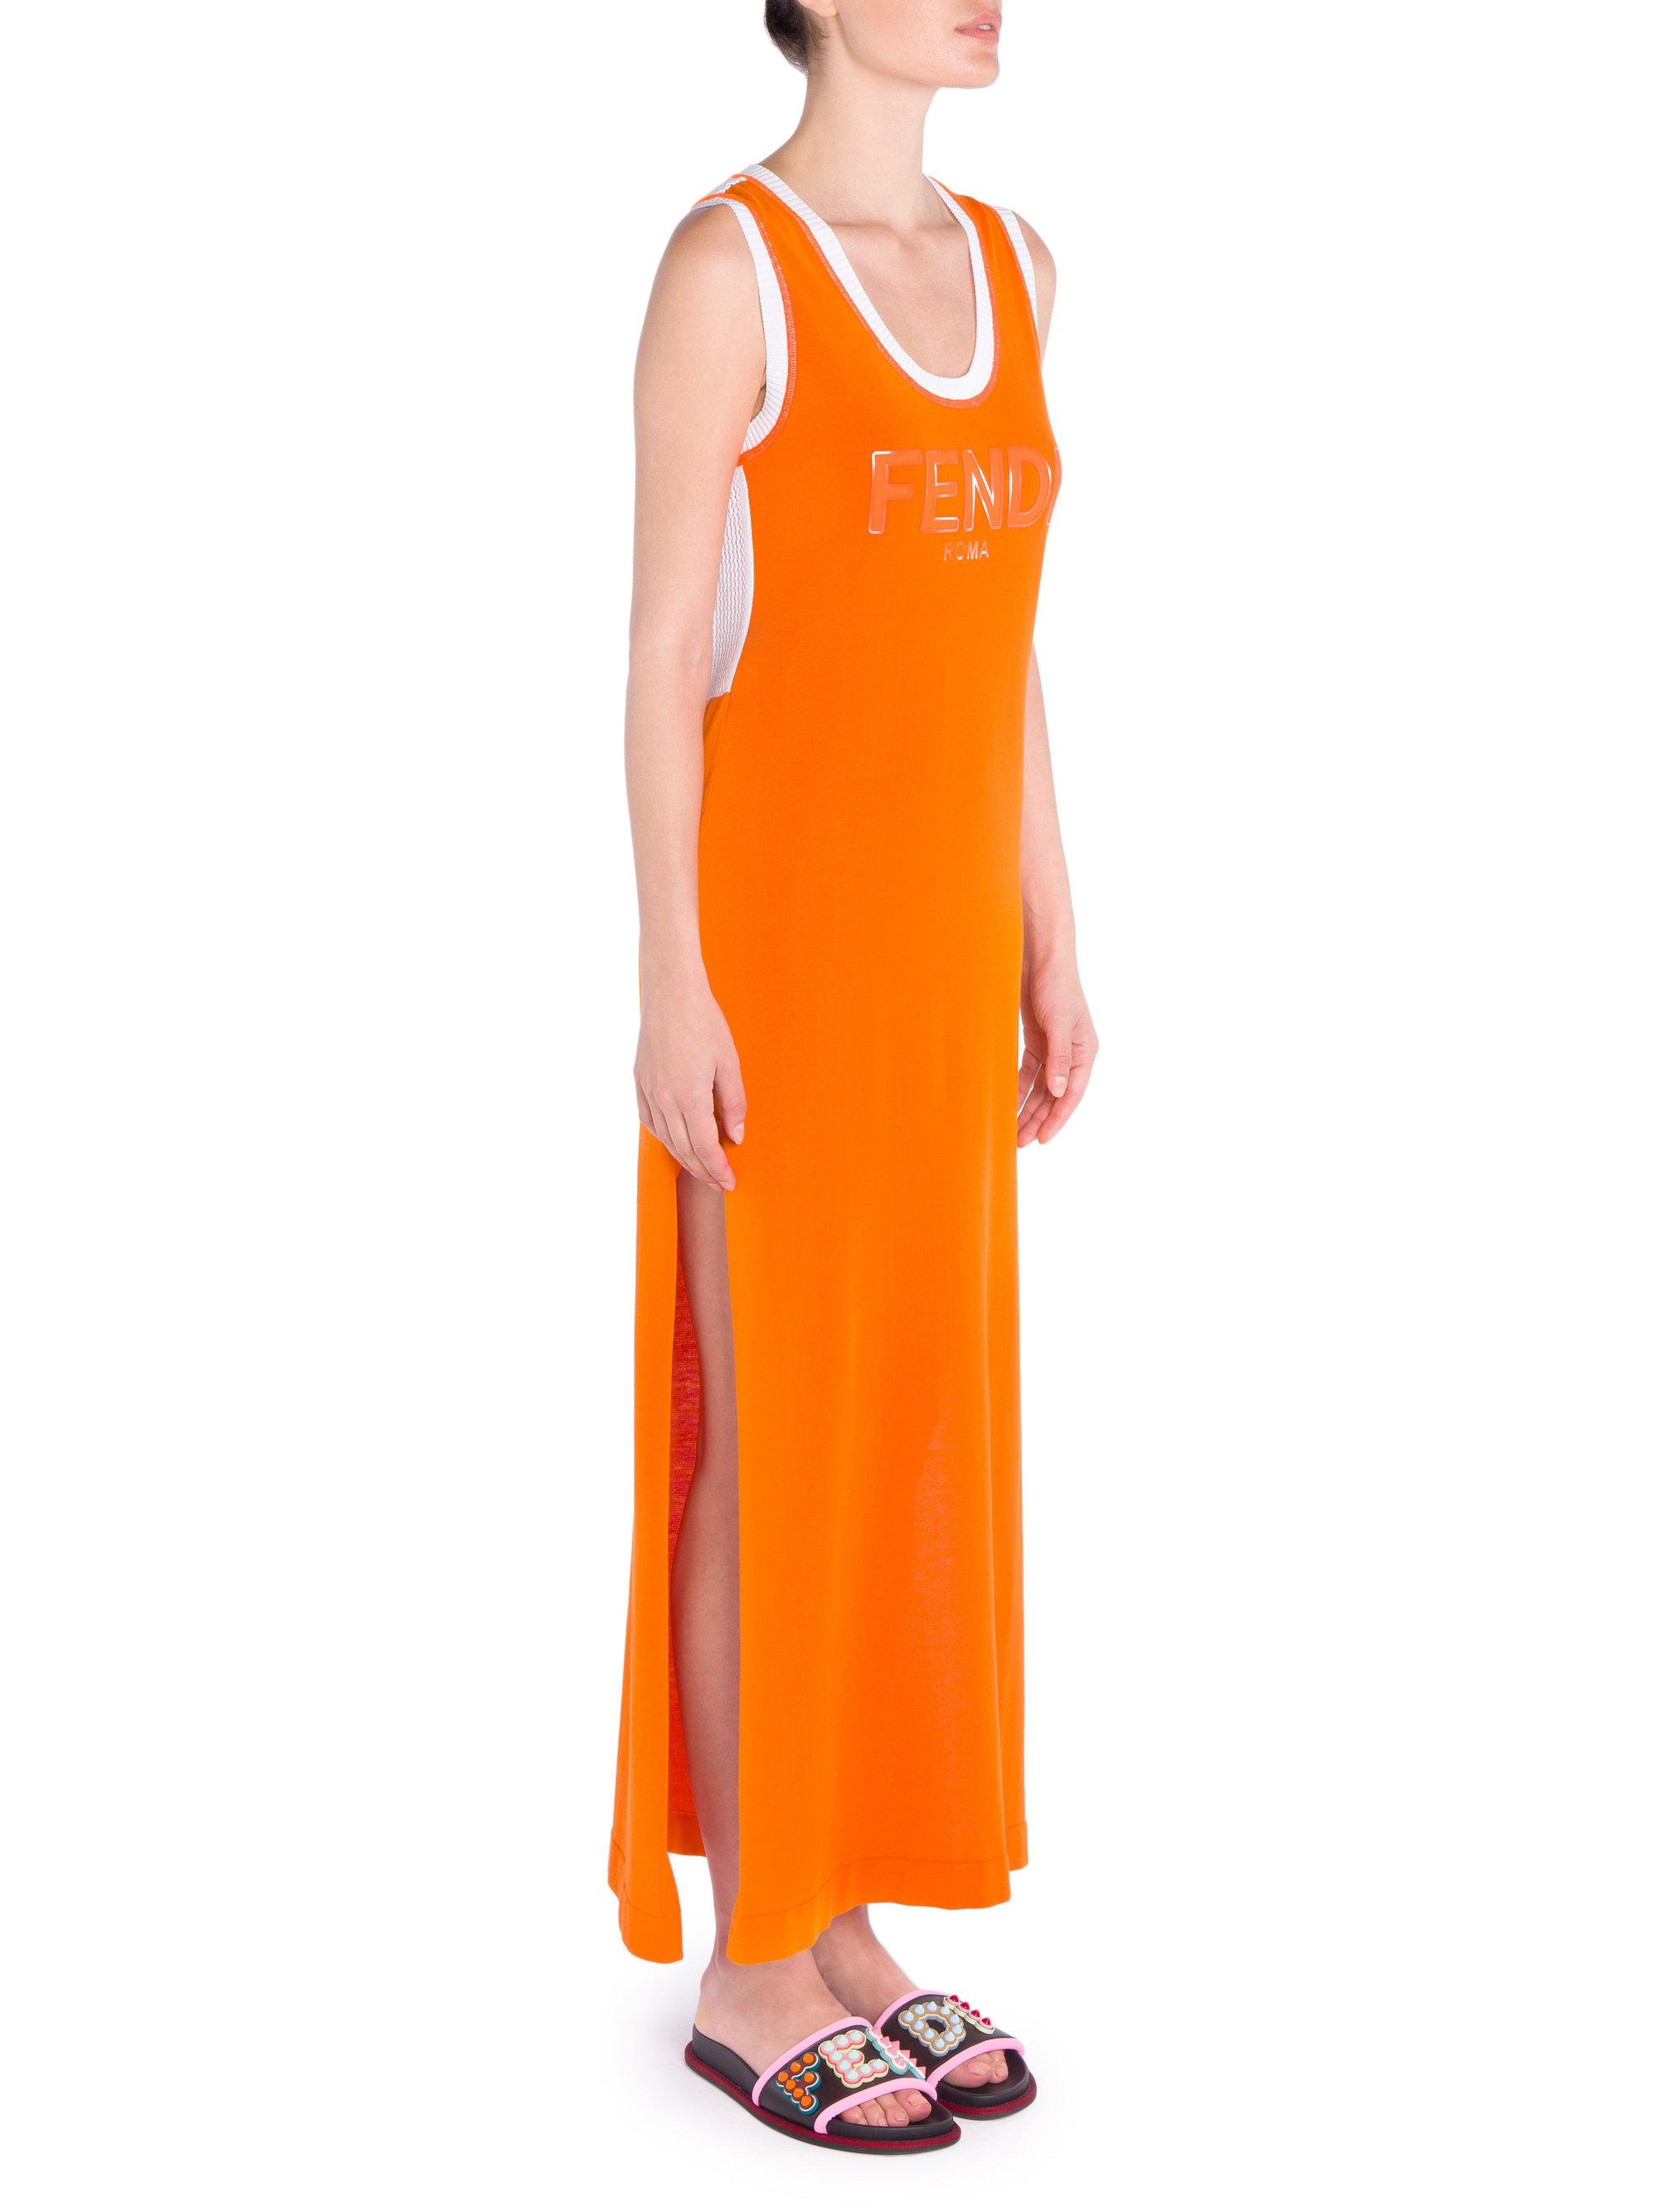 orange tank dress